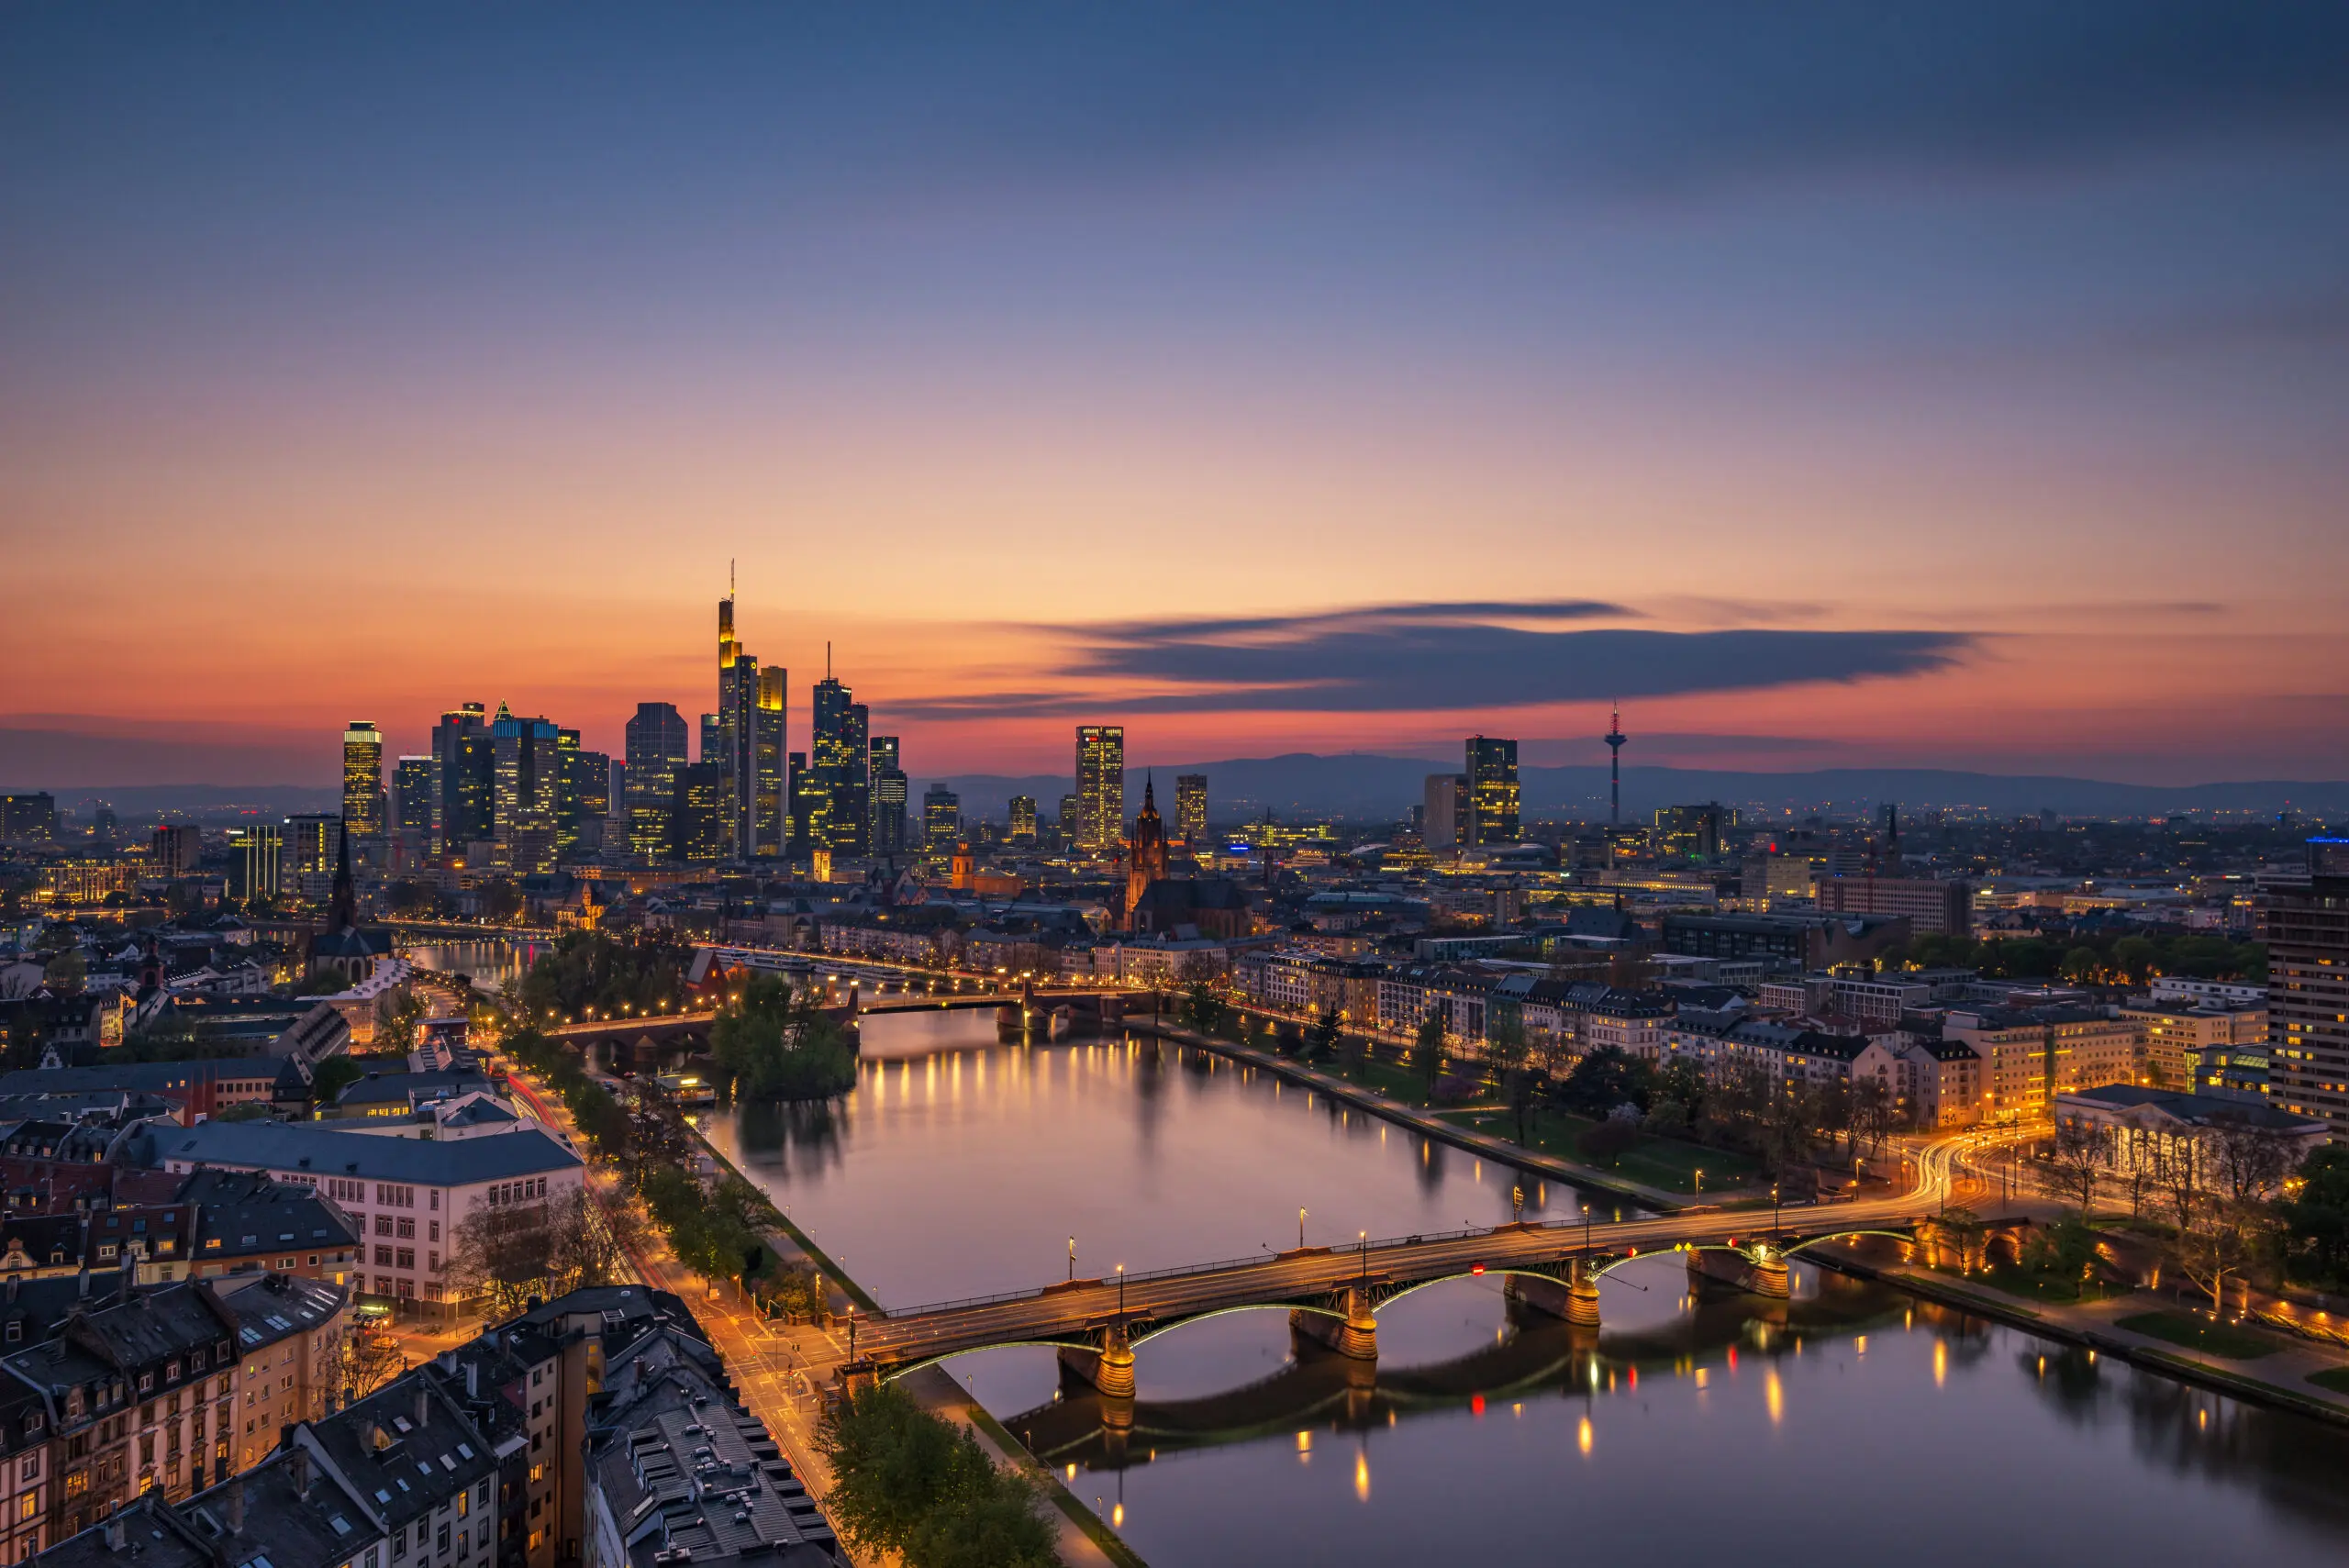 Frankfurt Skyline by Robin Oelschlegel